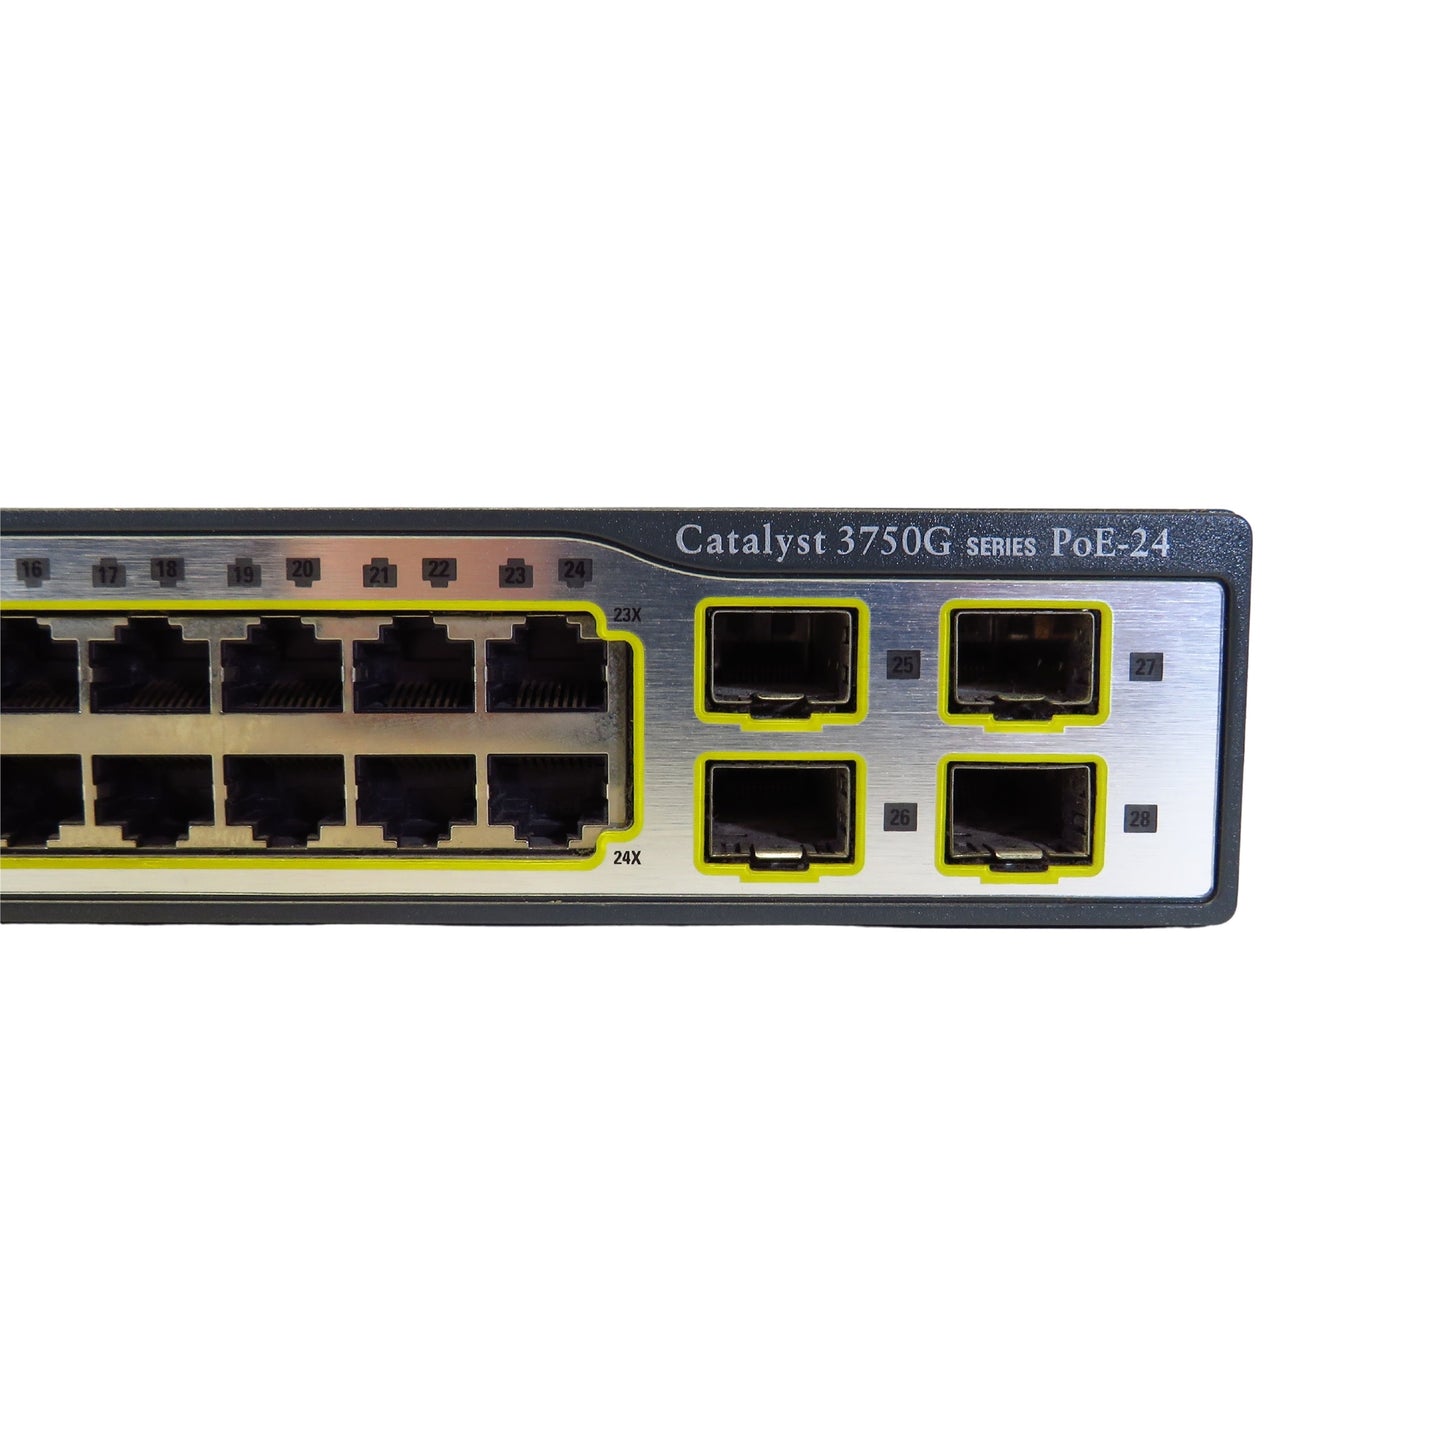 Cisco WS-C3750G-24PS-S Catalyst 3750G 24 Port PoE Gigabit Switch (Refurbished)